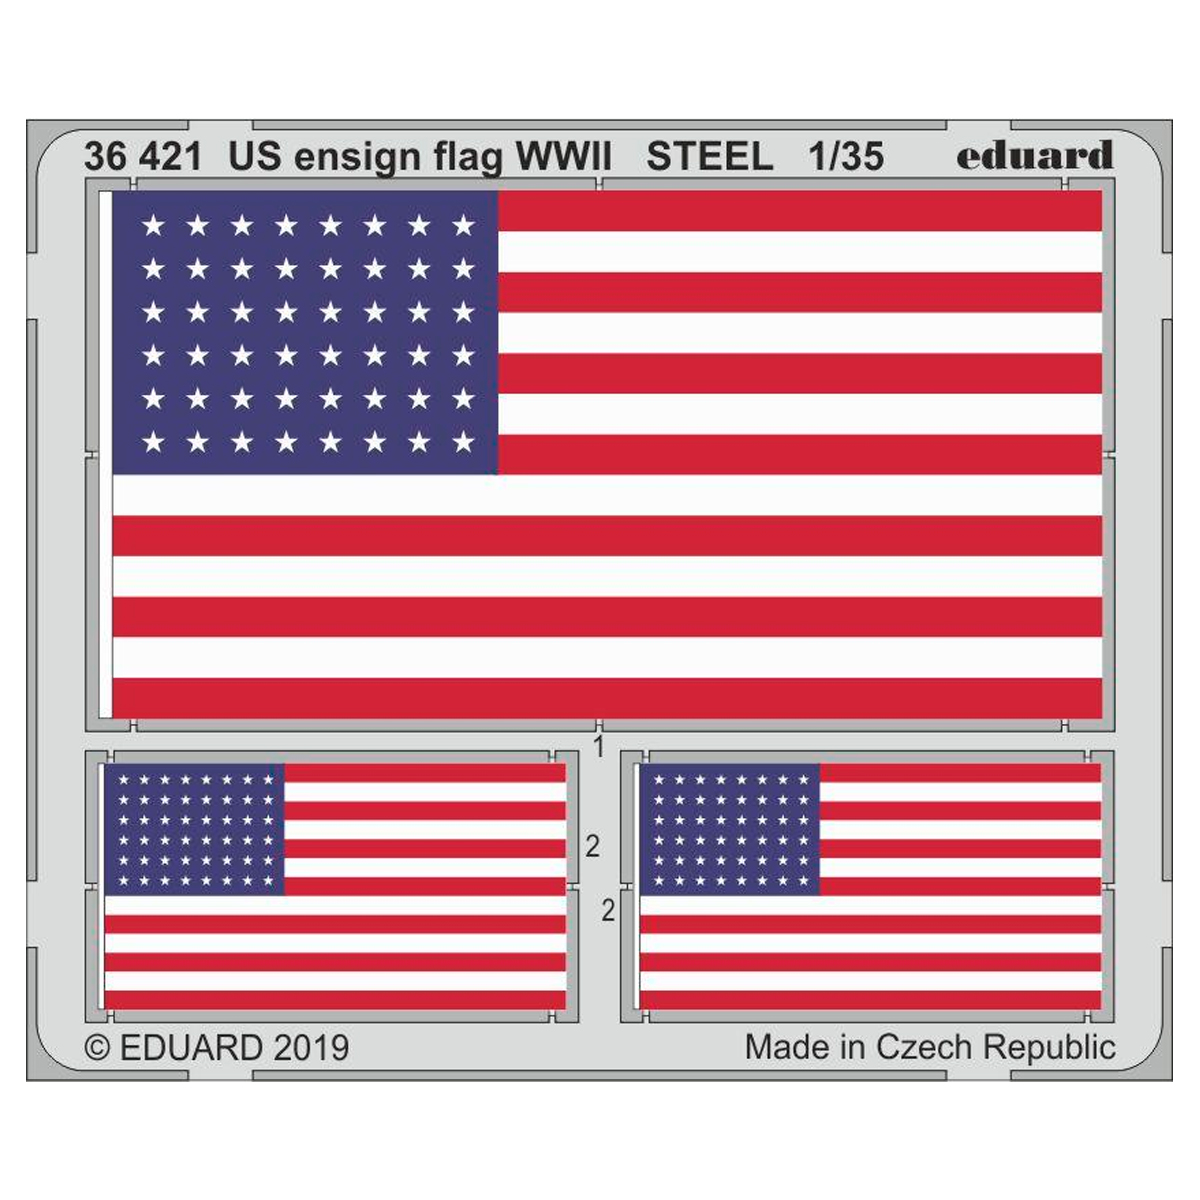 US ensign flag WWII STEEL 1/35